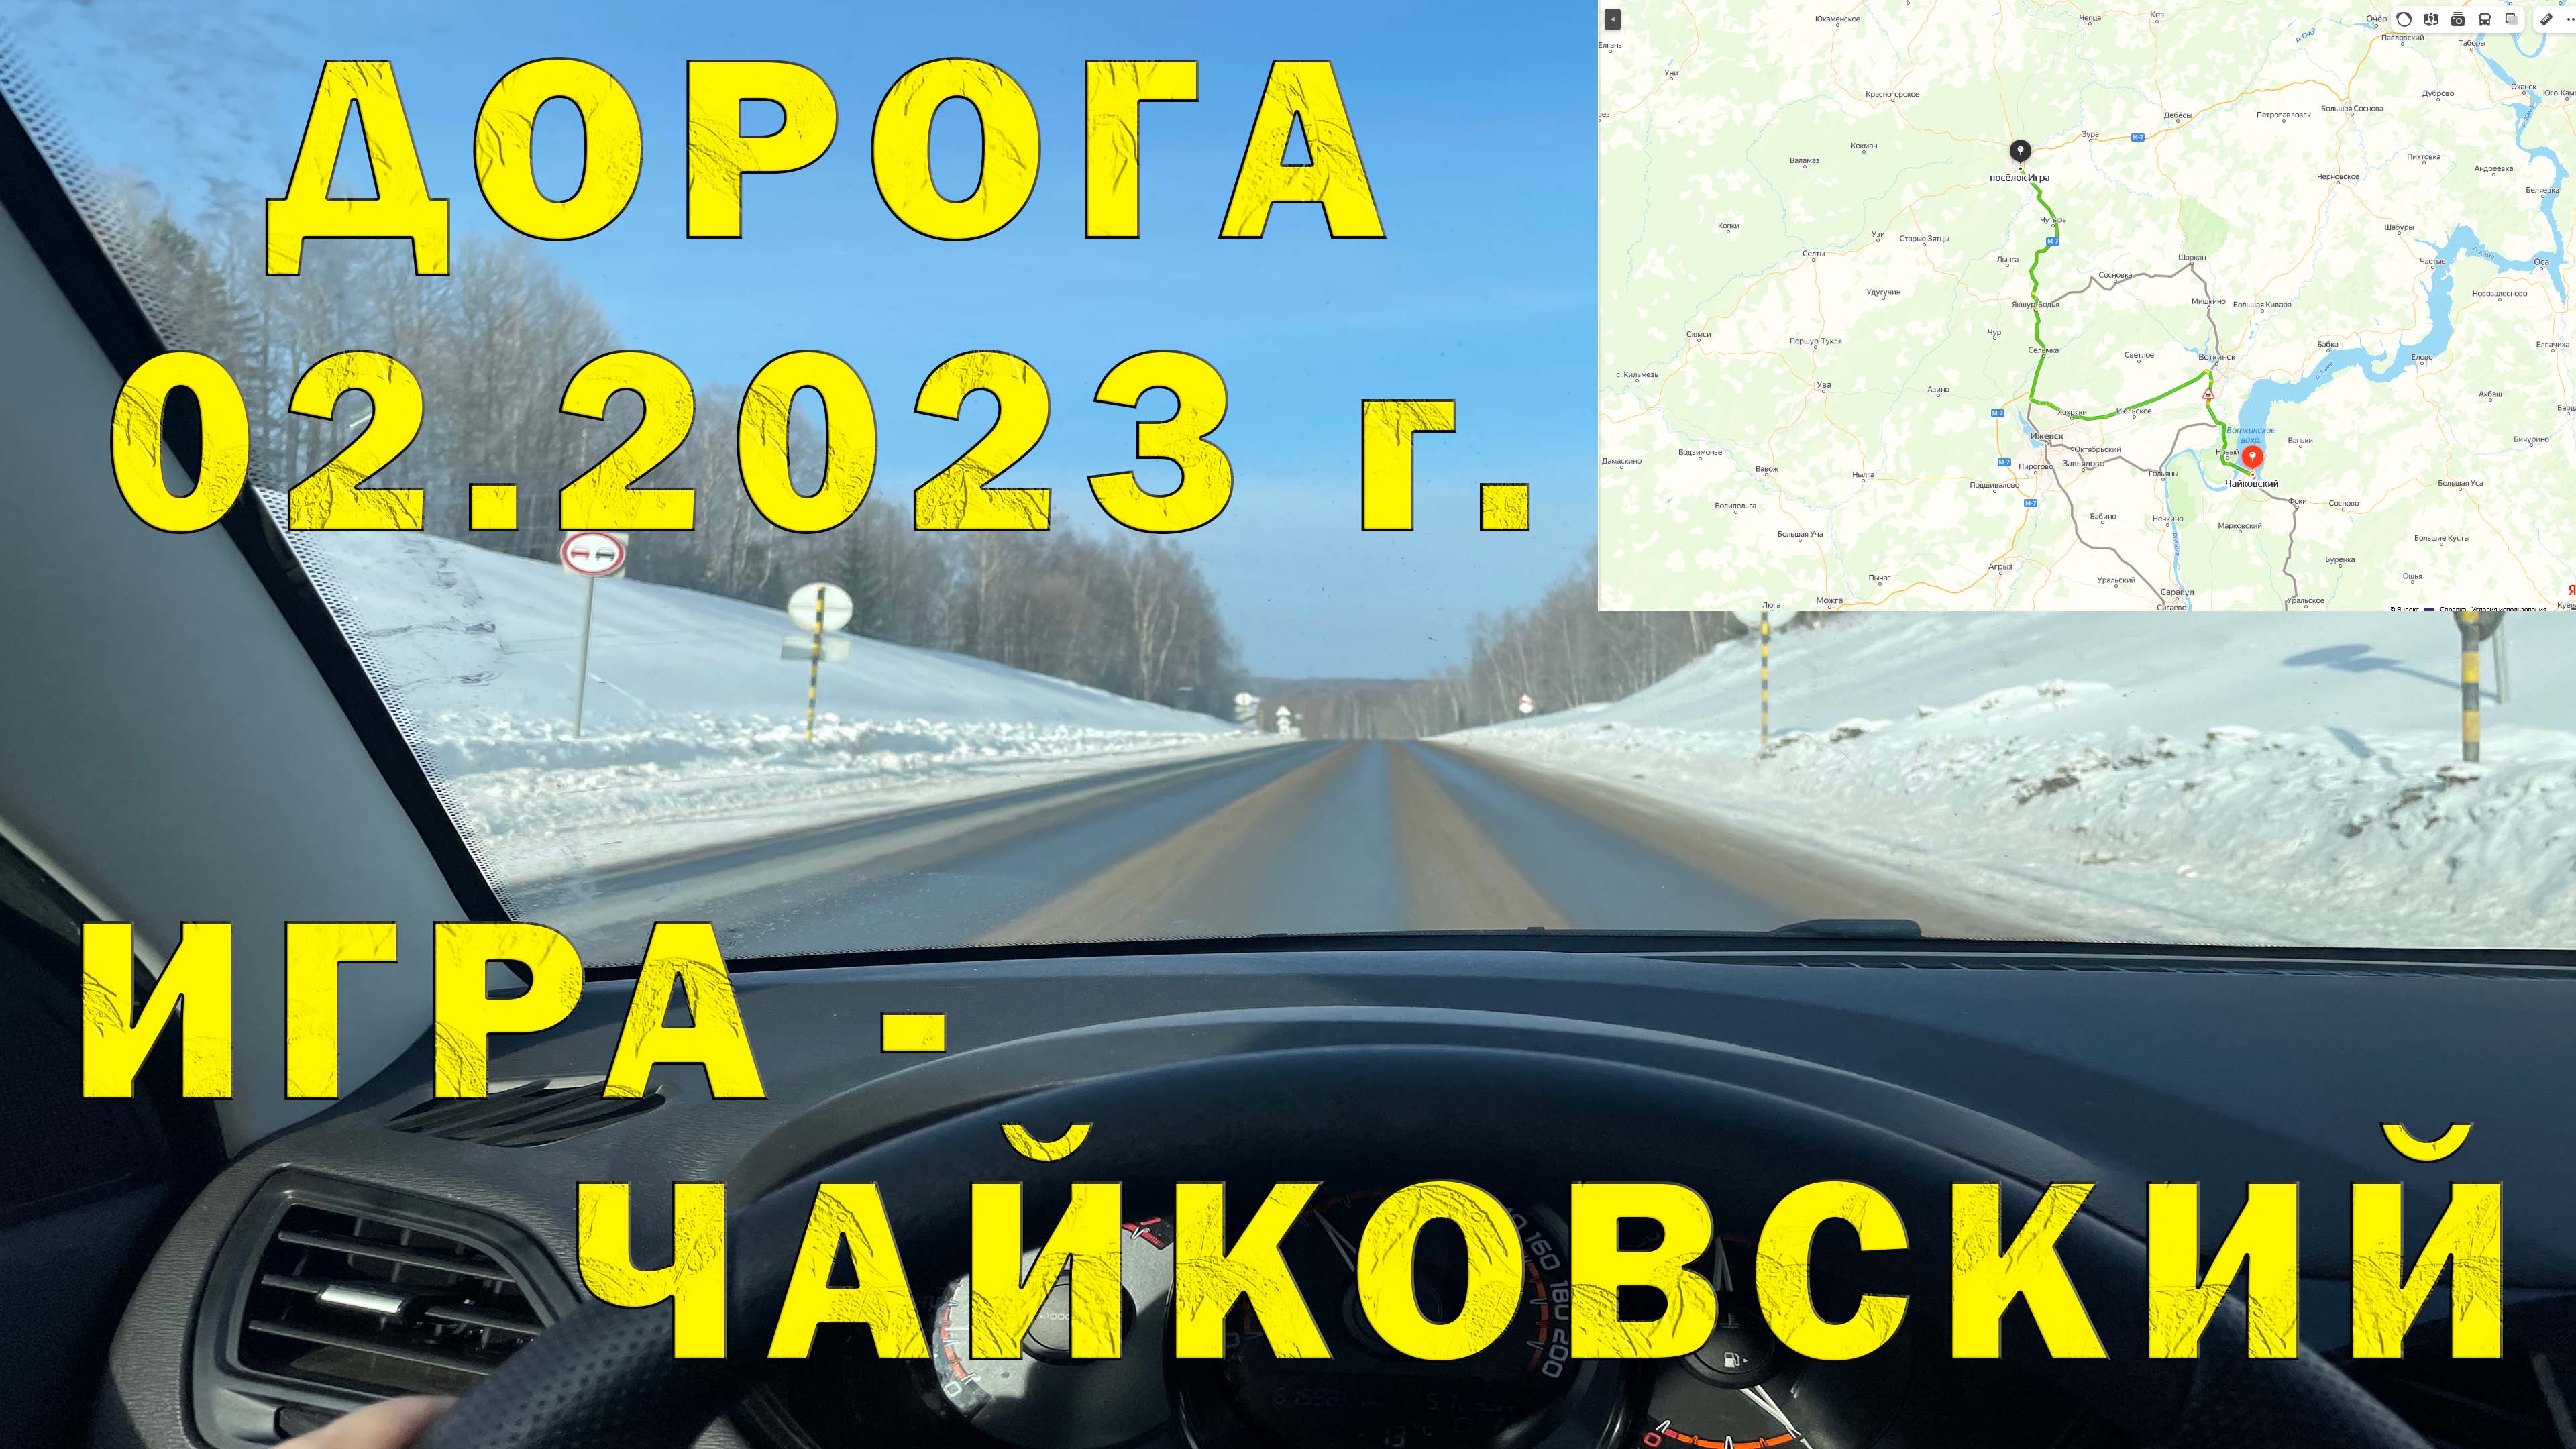 Участок автодороги M7 (Е22) от Игра (Республика Удмуртия) до Чайковский (Пермский край) 02.2023г.